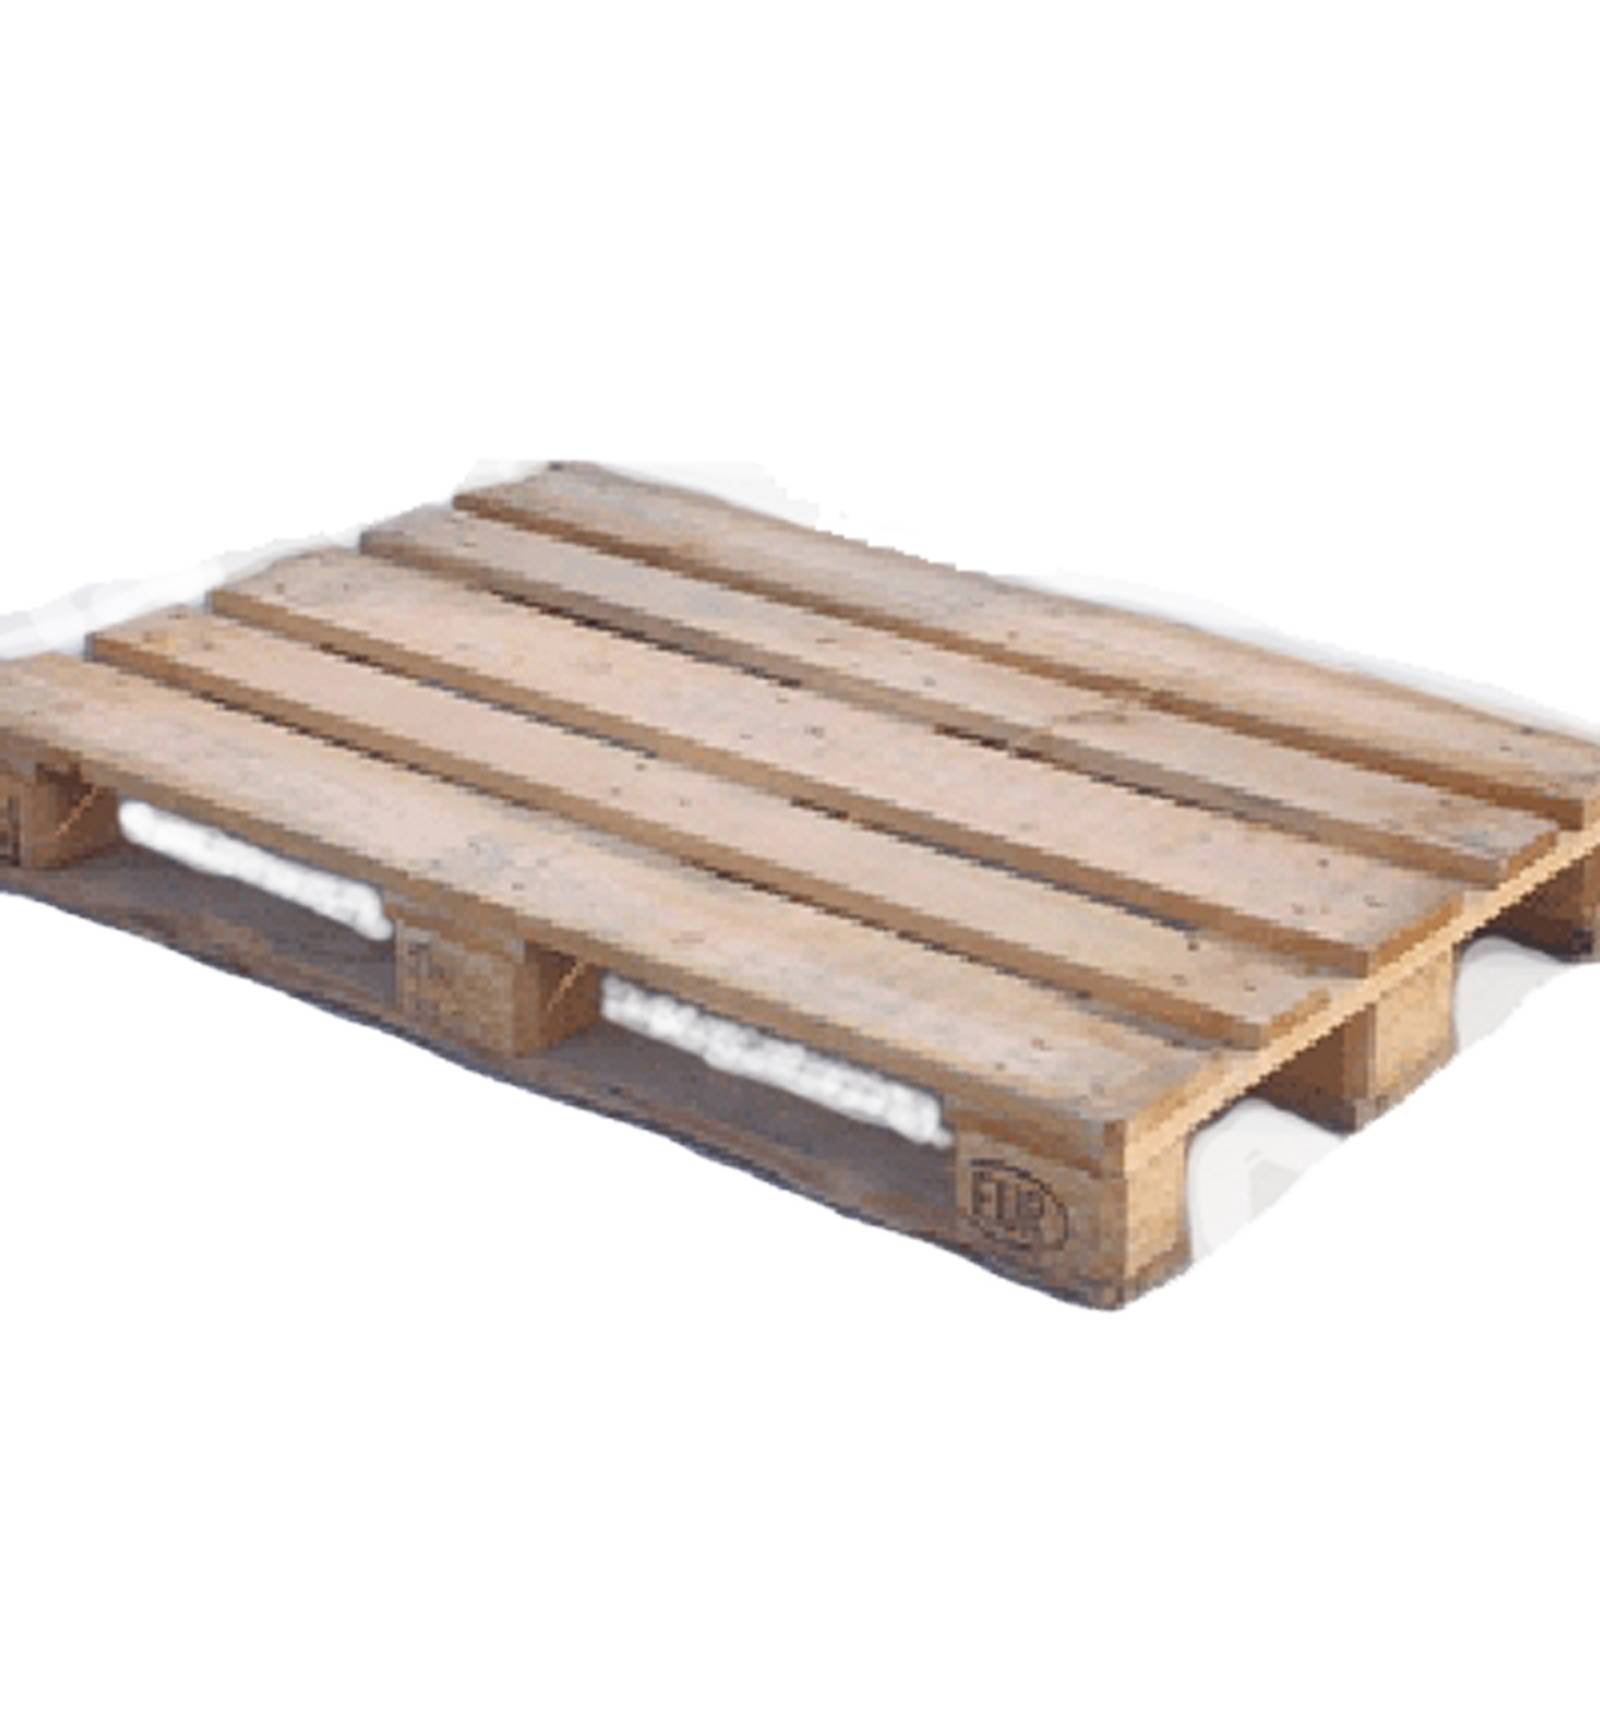 Europalette Holz 80 x120 cm Tranzport palletten Holzpalette gebraucht Abholung * 